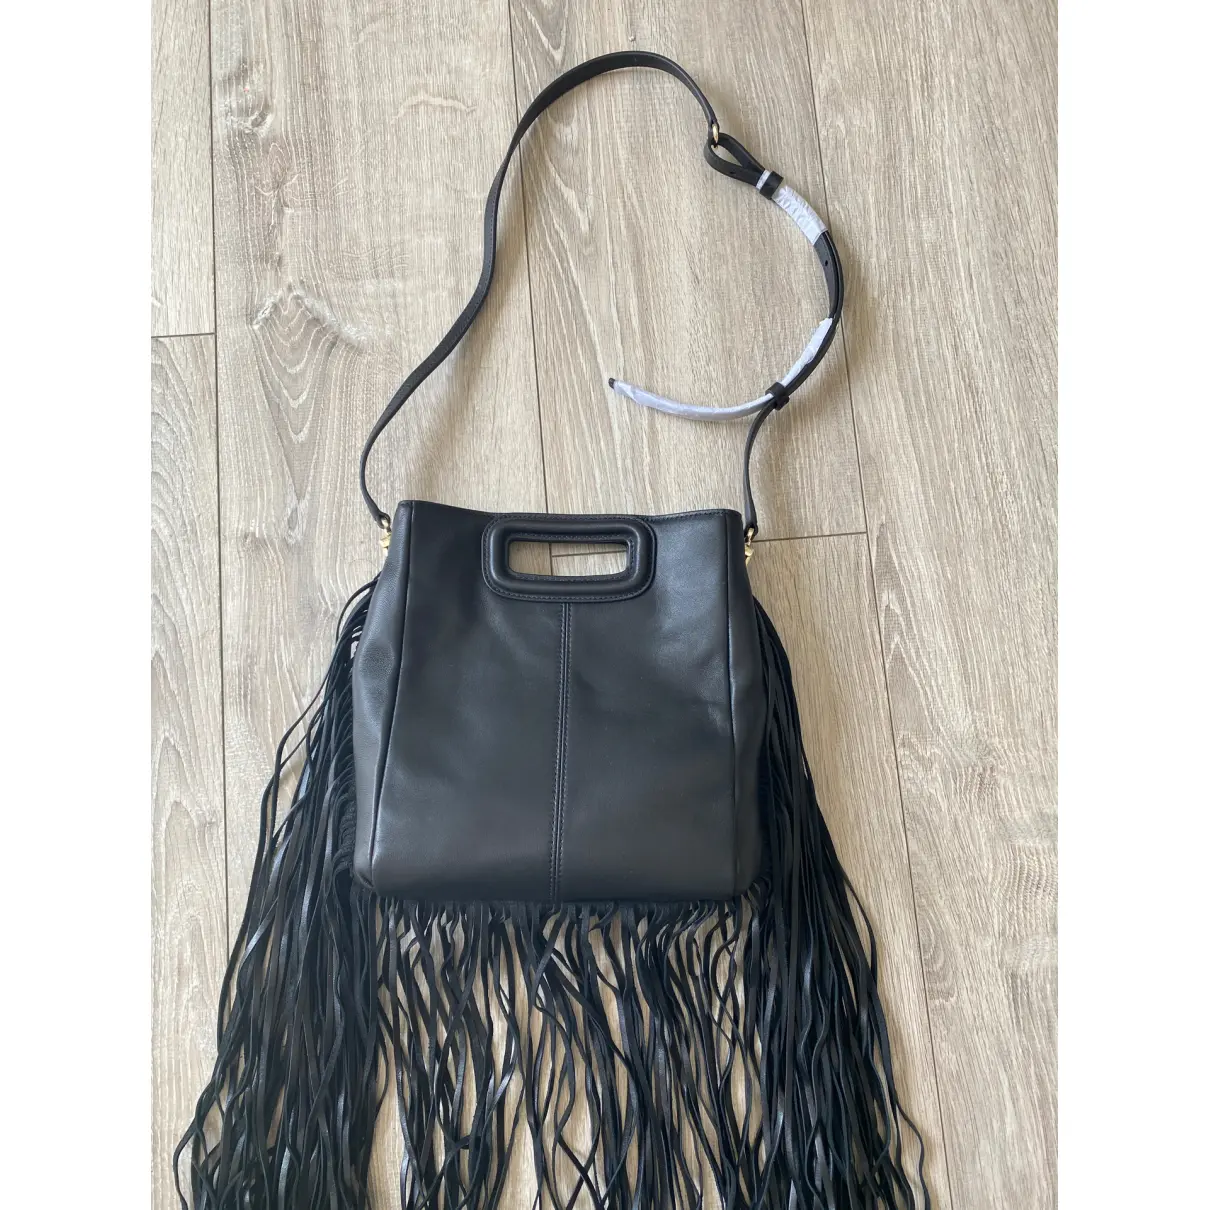 Buy Maje Sac M leather handbag online